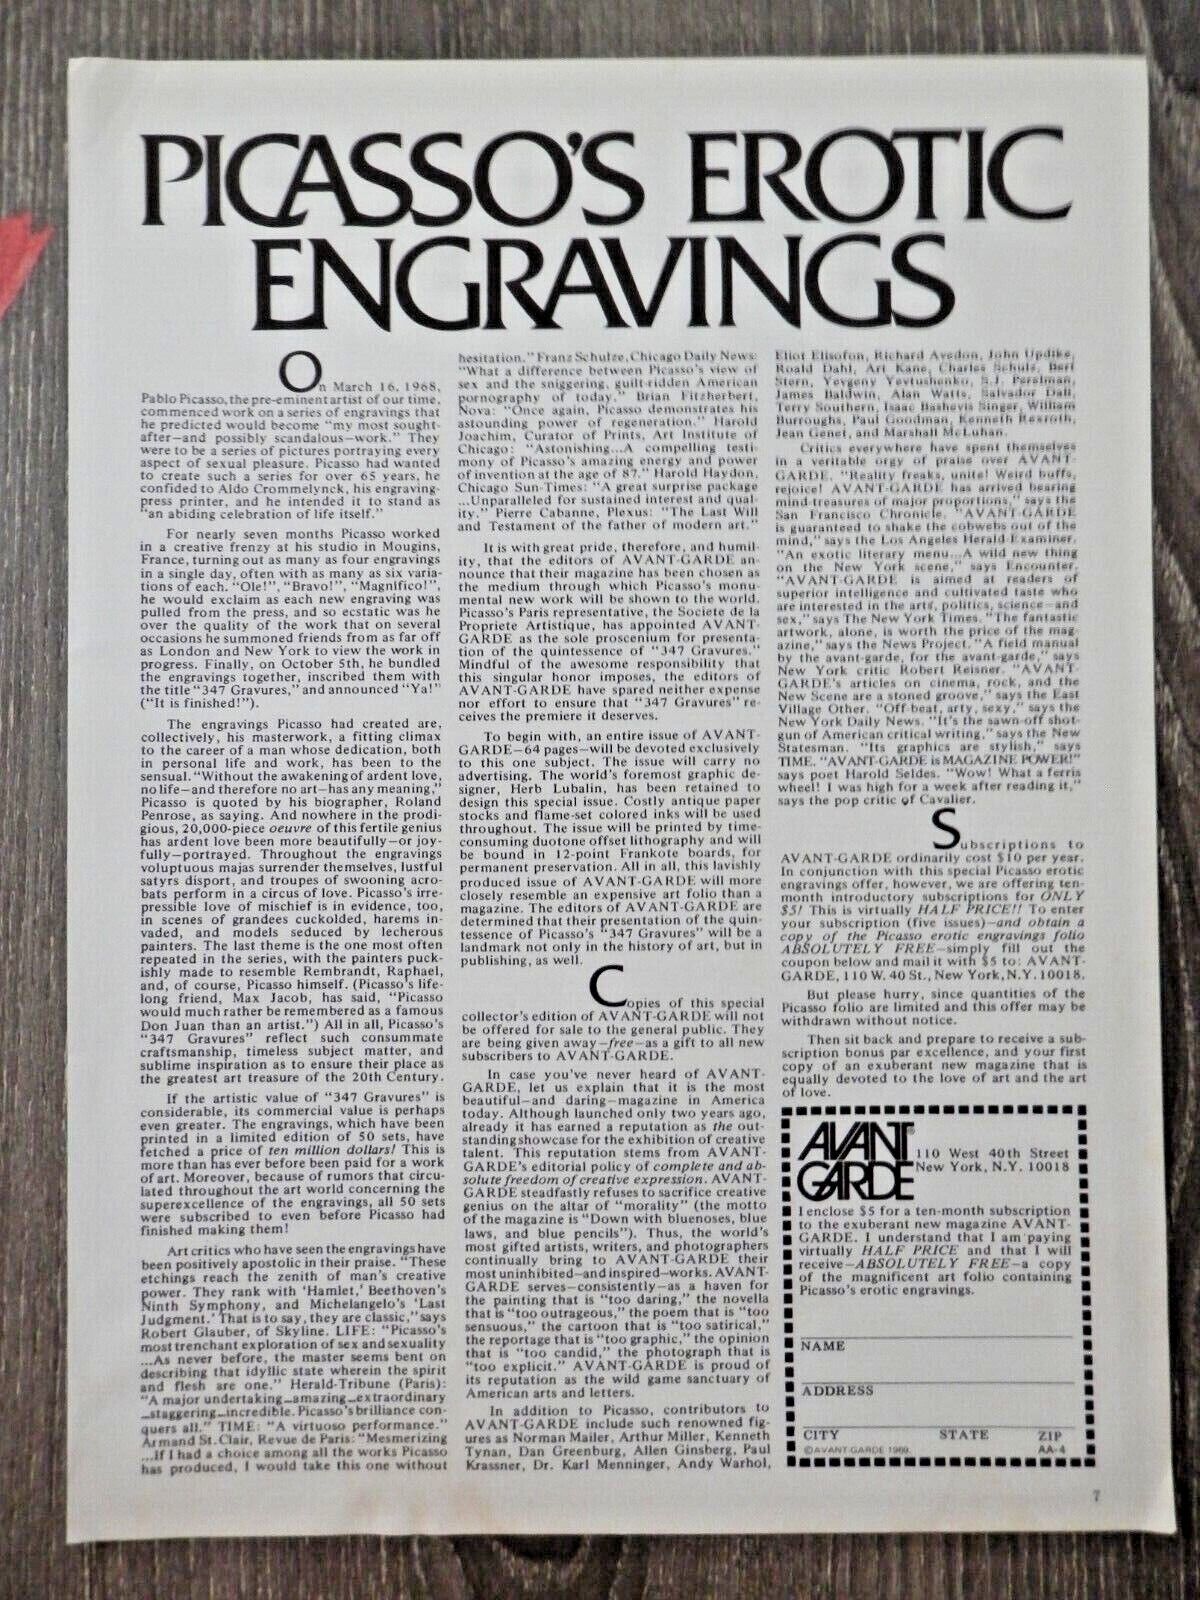 1970 PRINT AD, Picasso\'s Erotic Engravings, Avant Garde Magazine Subscription